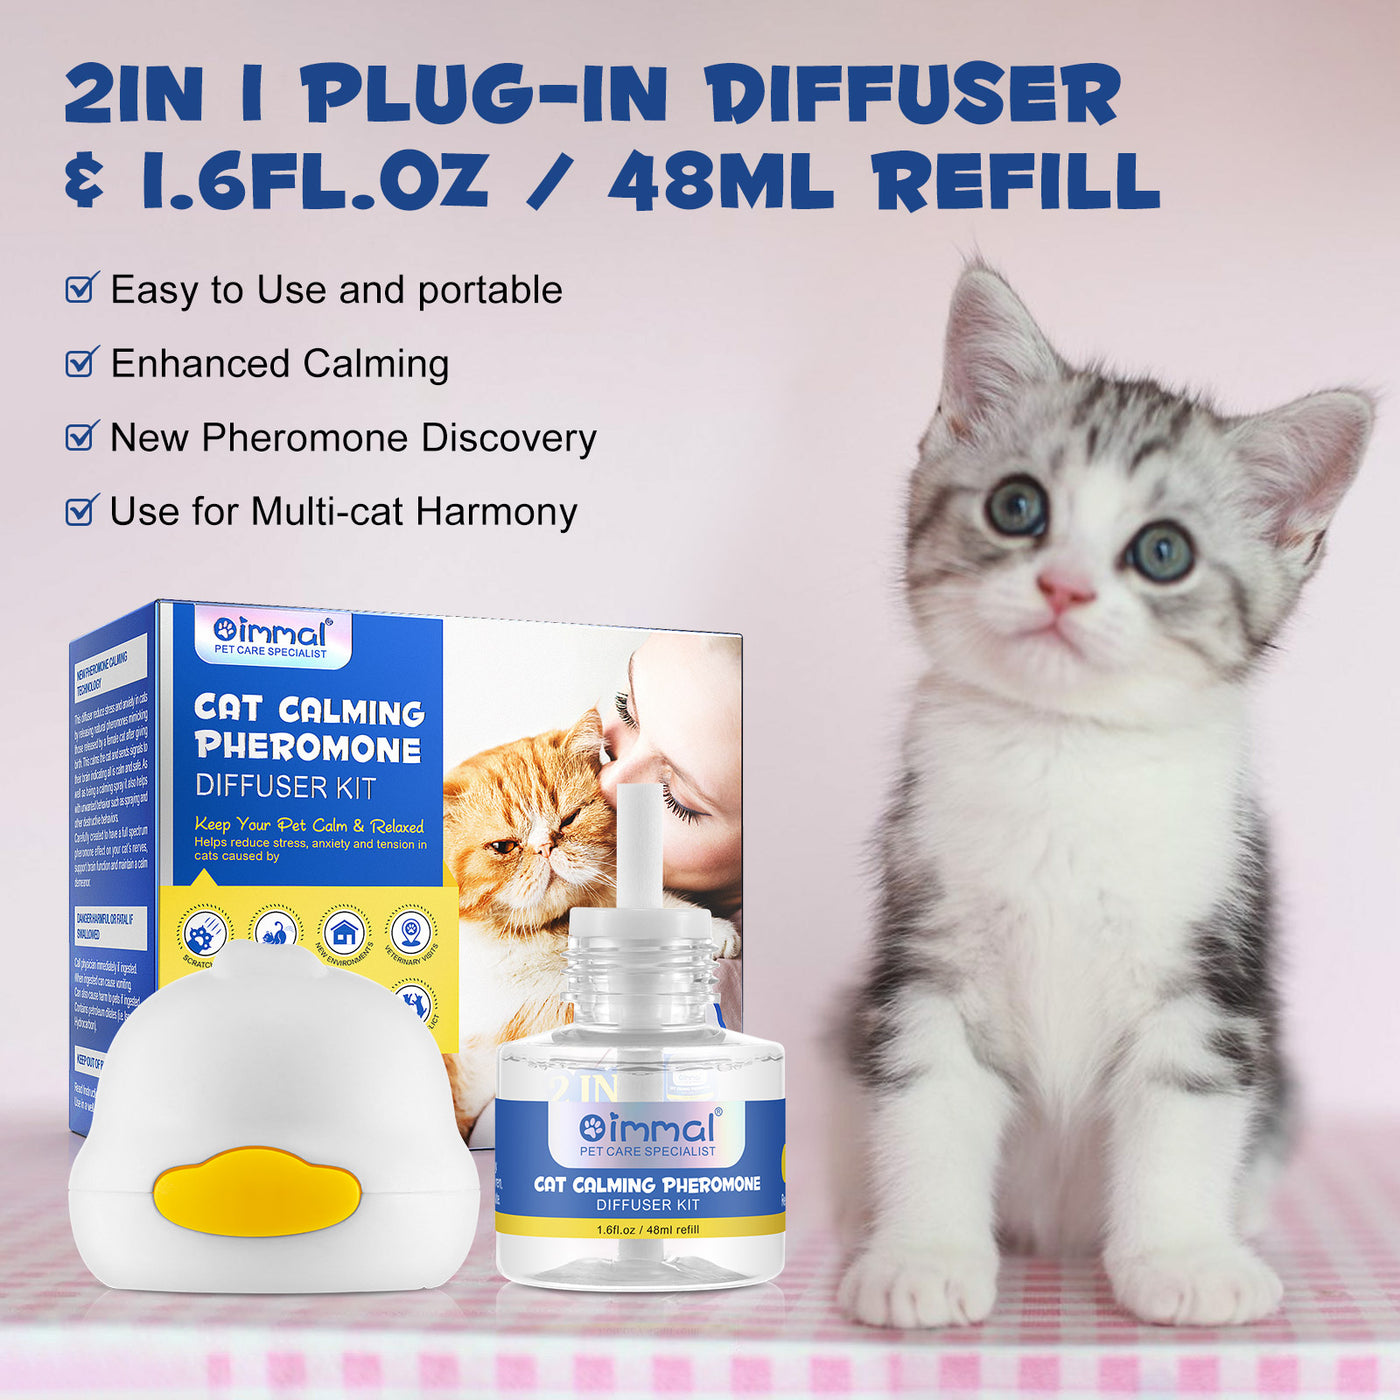 Oimmal Cat Calming Pheromone Diffuser Kit